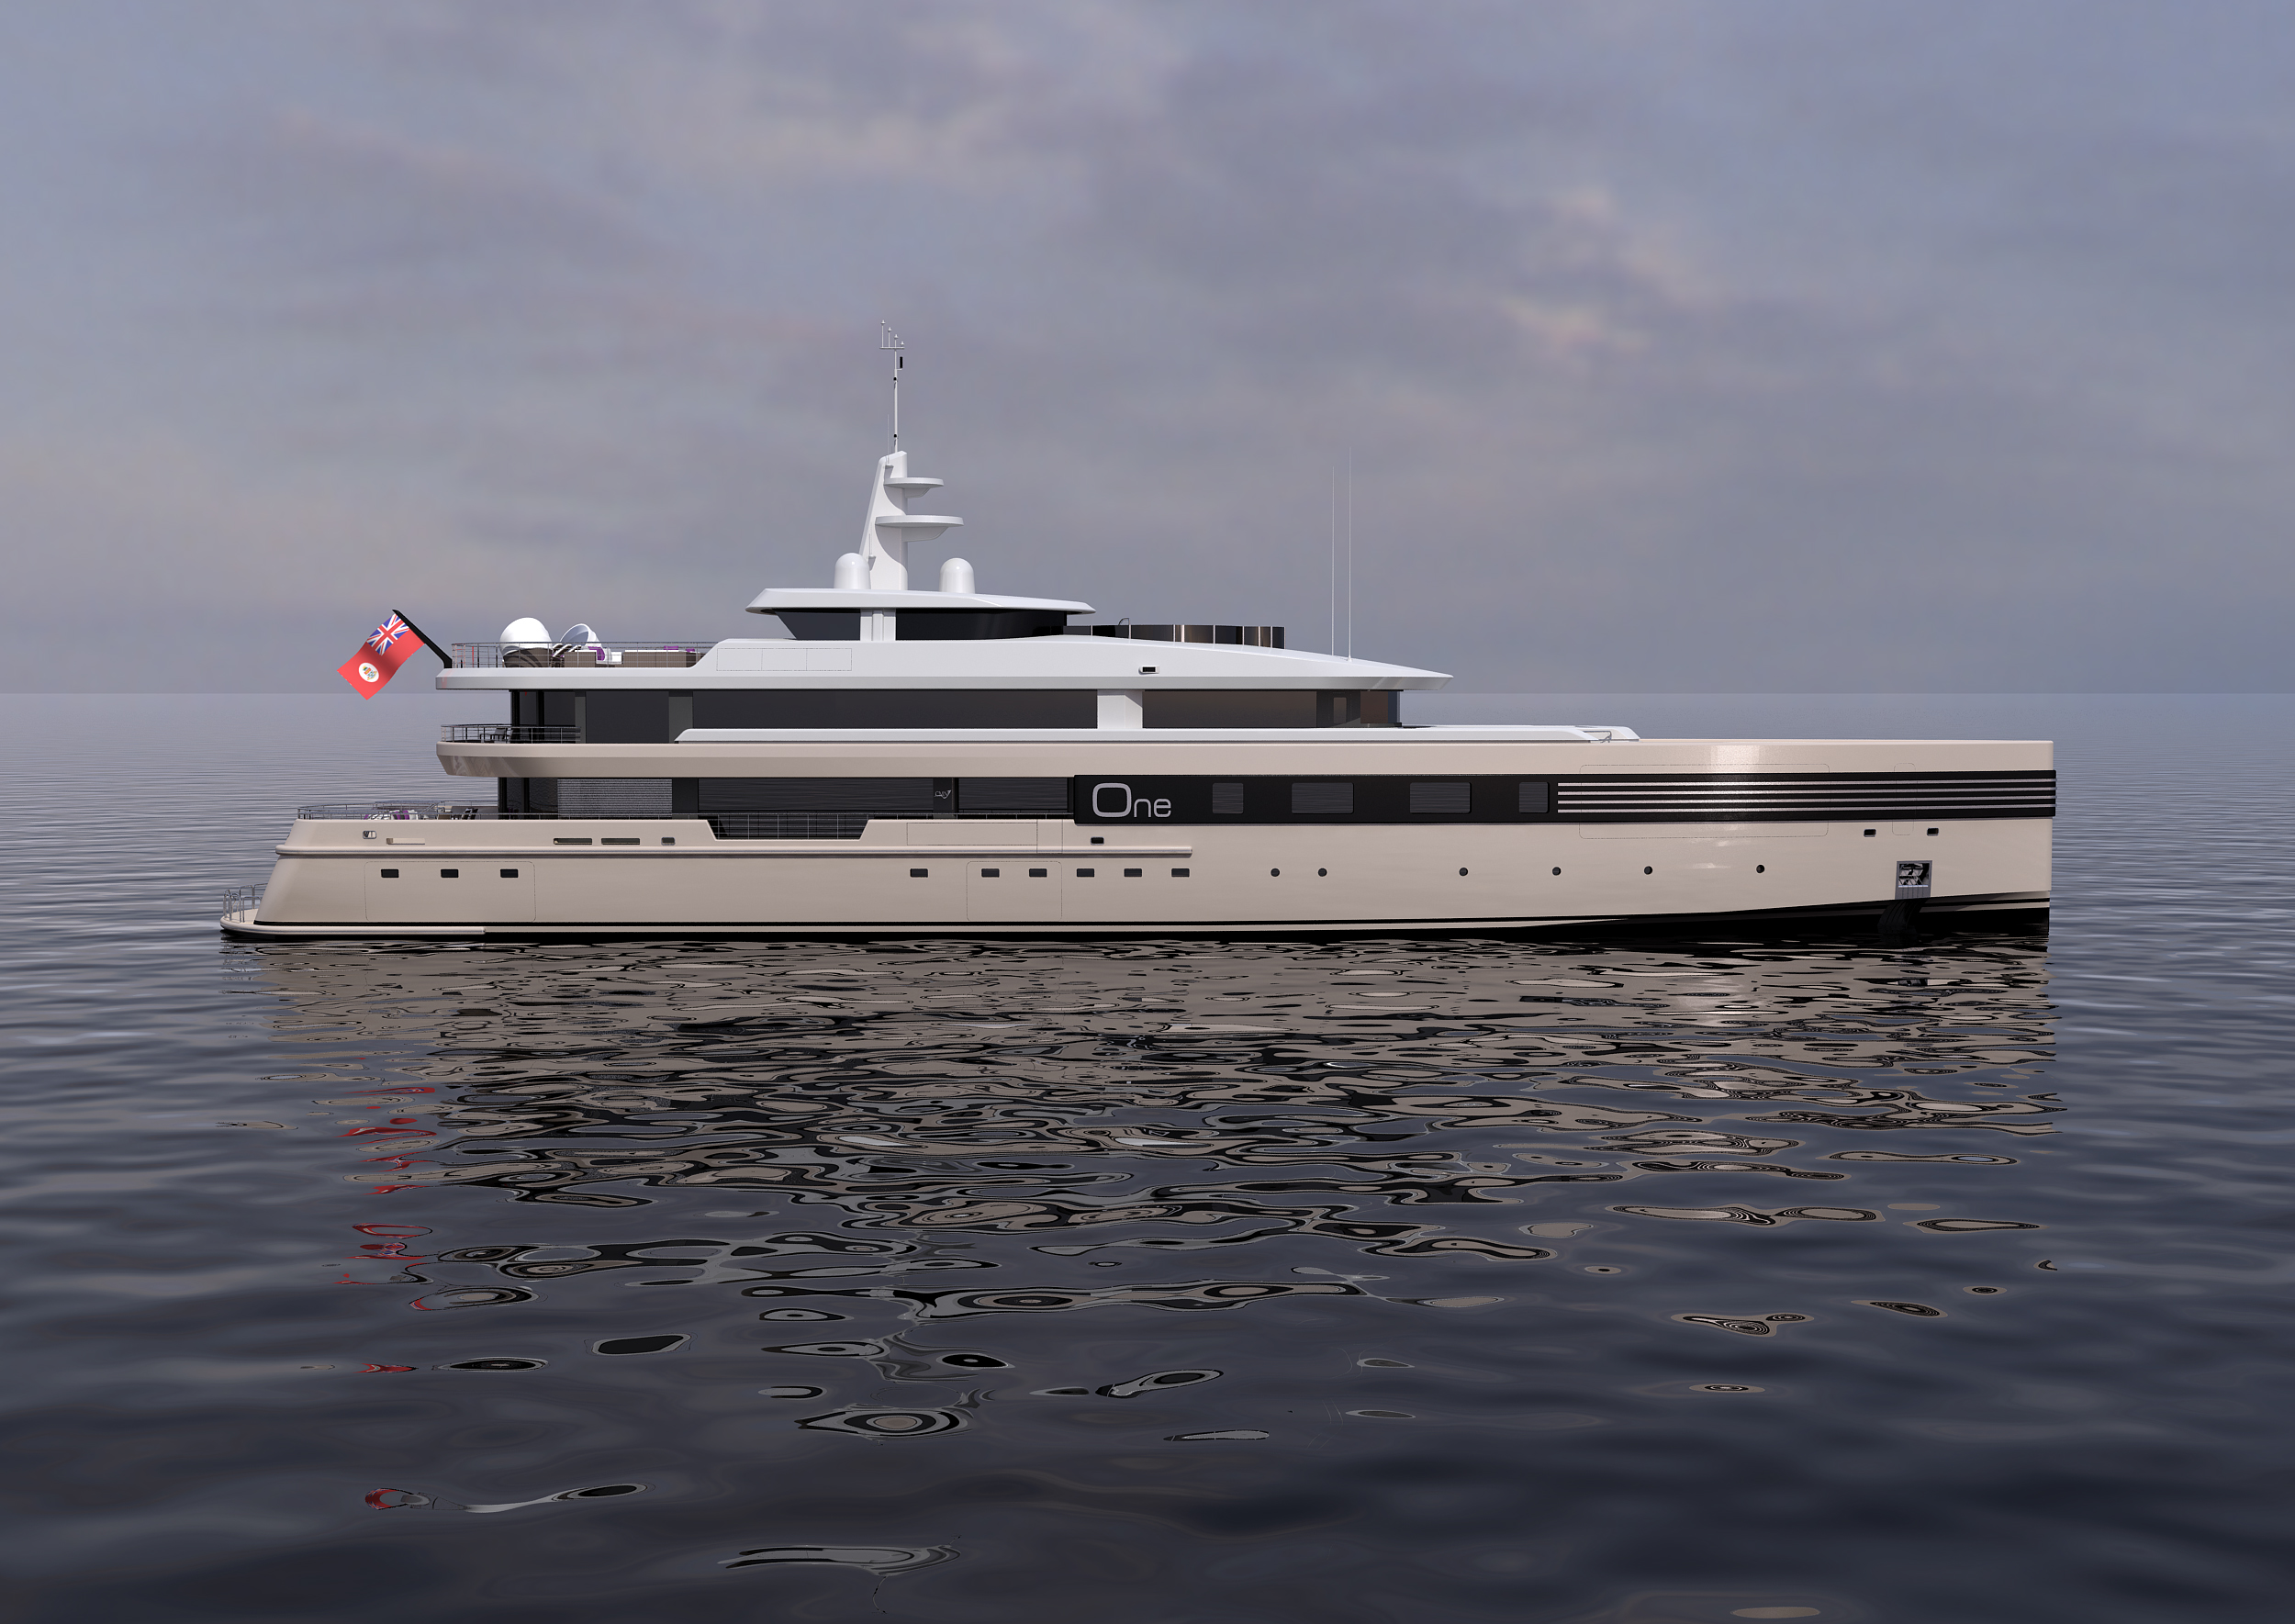 CMN luxury motor yacht ONE - CMN 65m Superyacht ONE: an “Avant-garde 